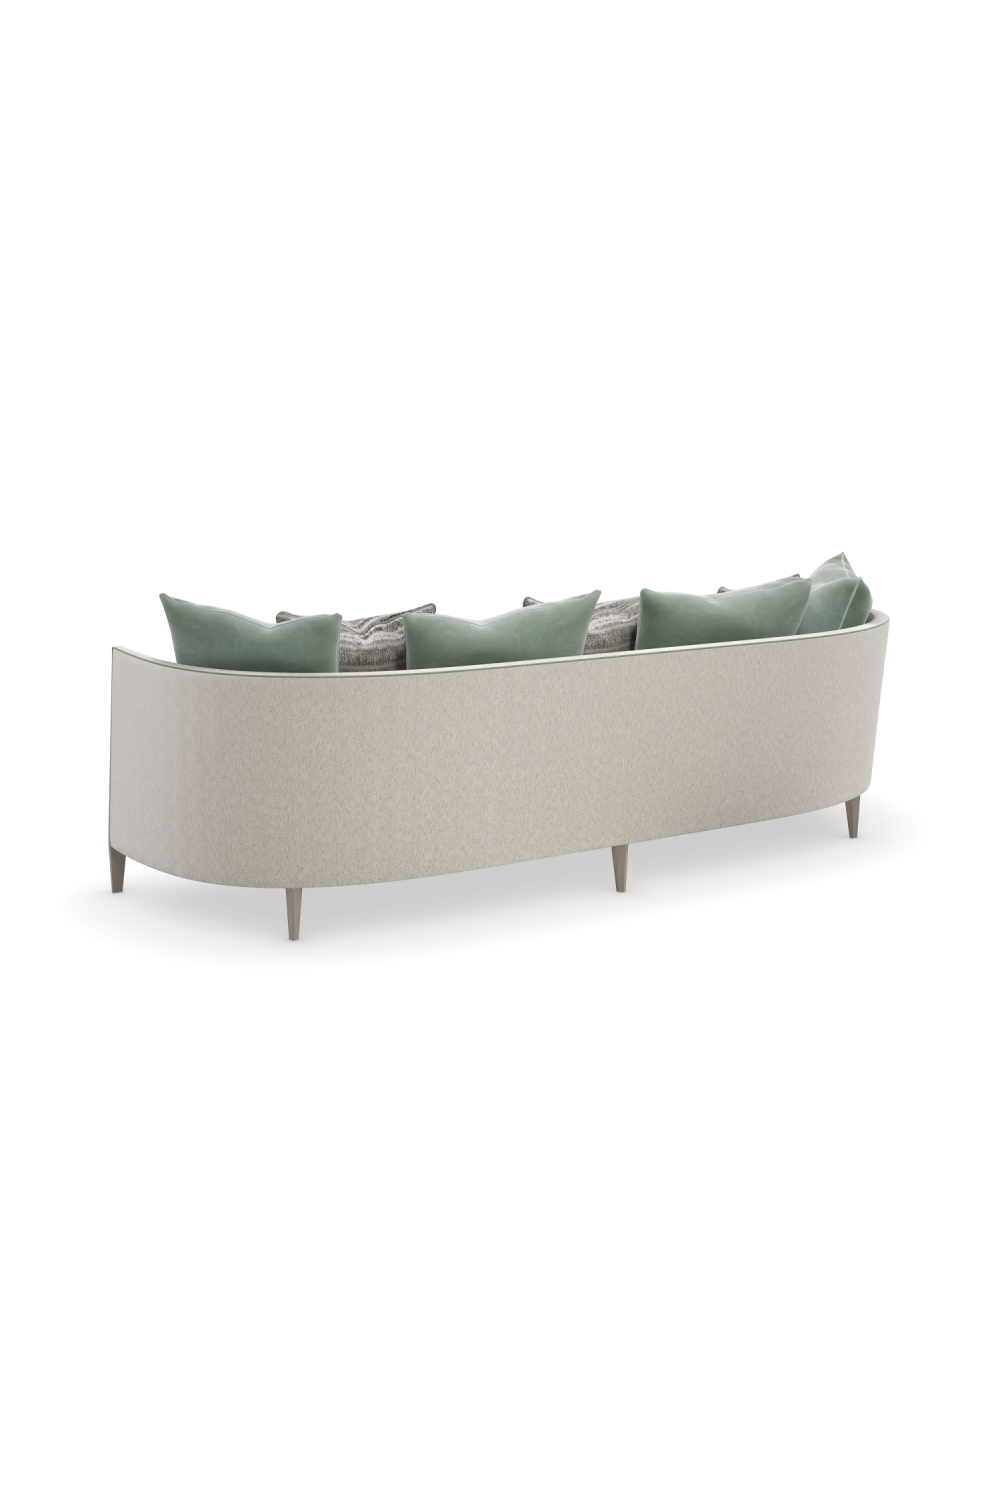 Contemporary Gray Sofa | Caracole Piping Hot | Oroa.com